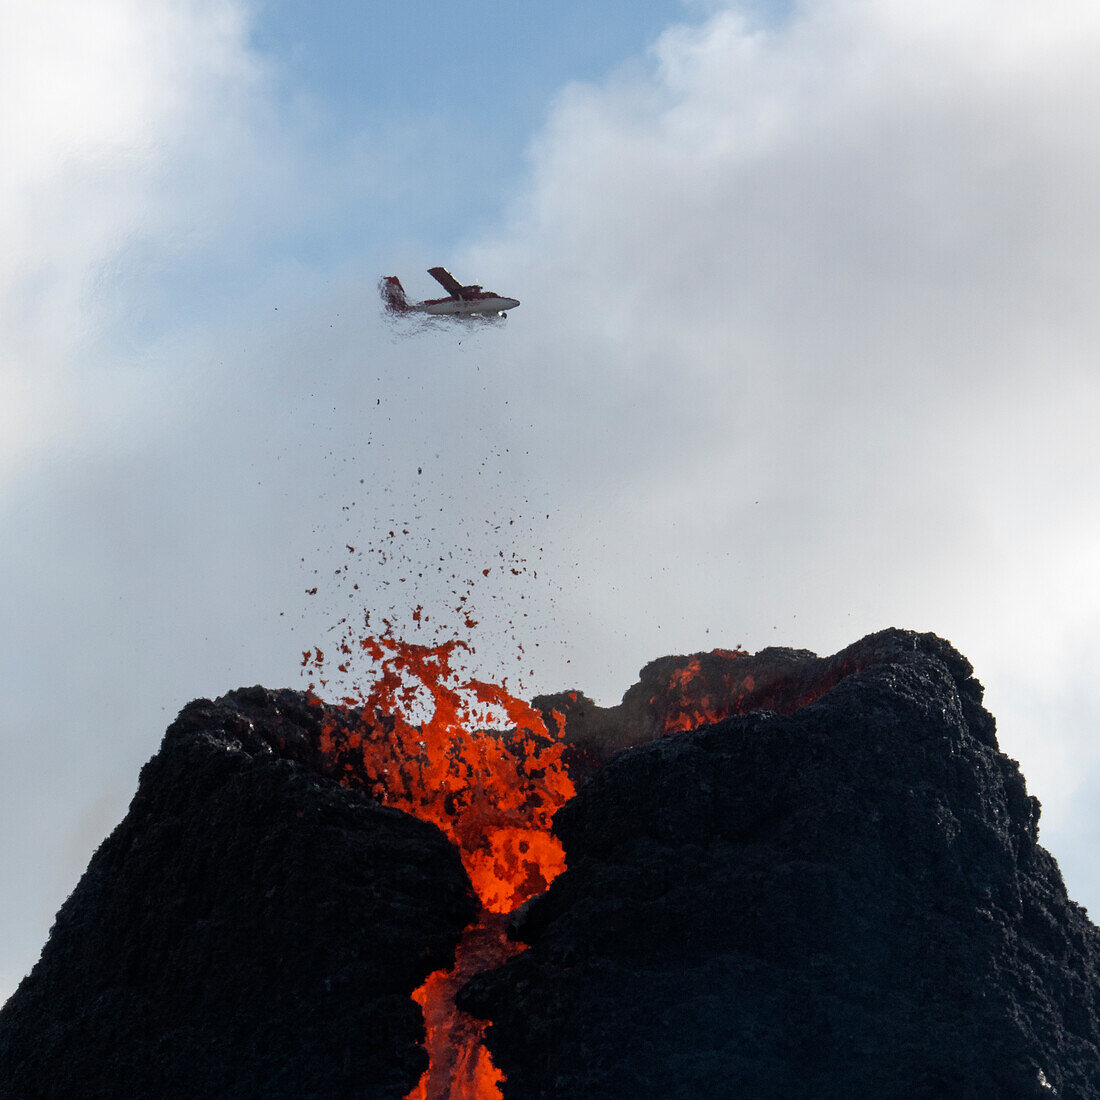 Reykjanes Peninsula, Iceland - March 23rd 2021: Volcanic eruption Reykjanes Peninsula Iceland, with a plane in the background. Fagradalsfjall Volcano, Geldingadalir Eruption